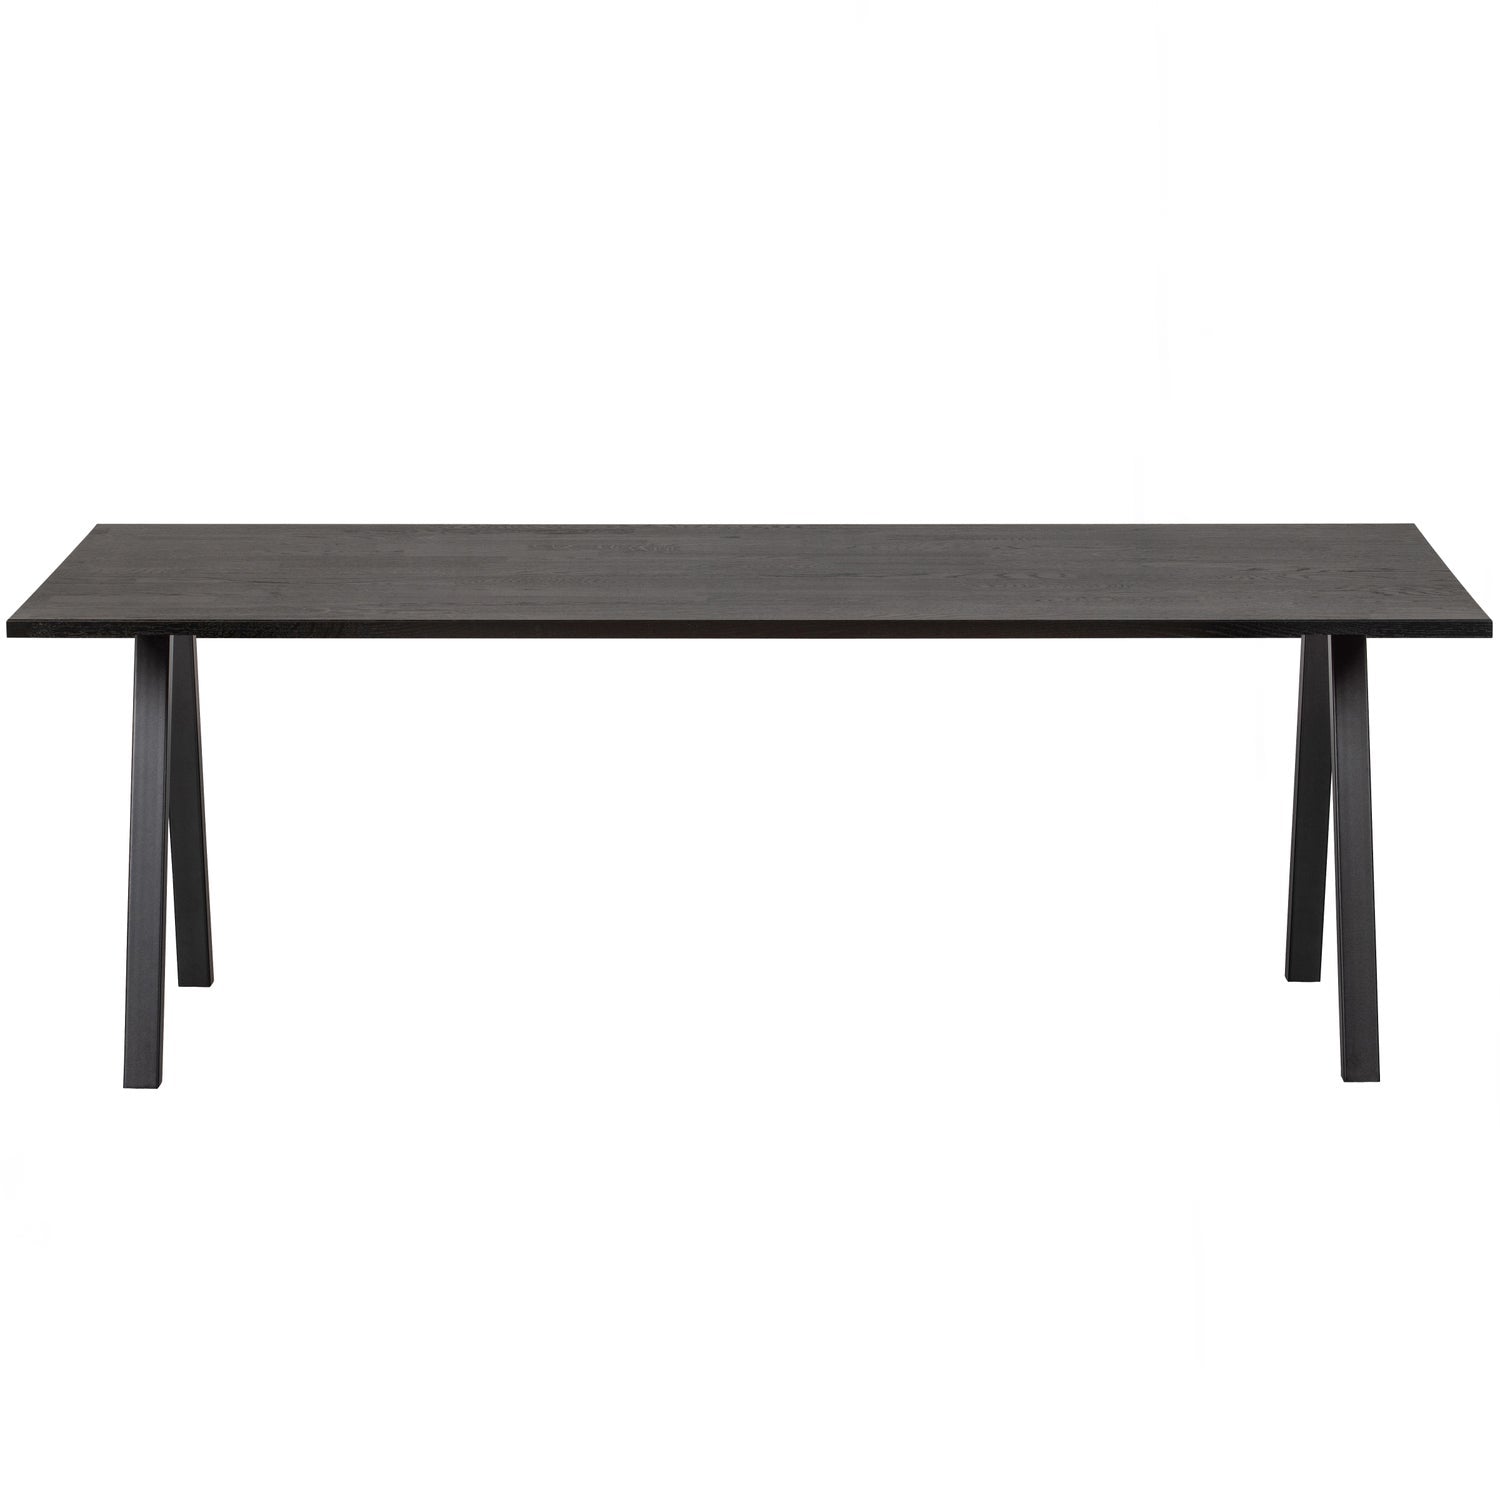 TABLO TABLE OAK BLACKNIGHT 200X90 [fsc] & SQUARE LEG